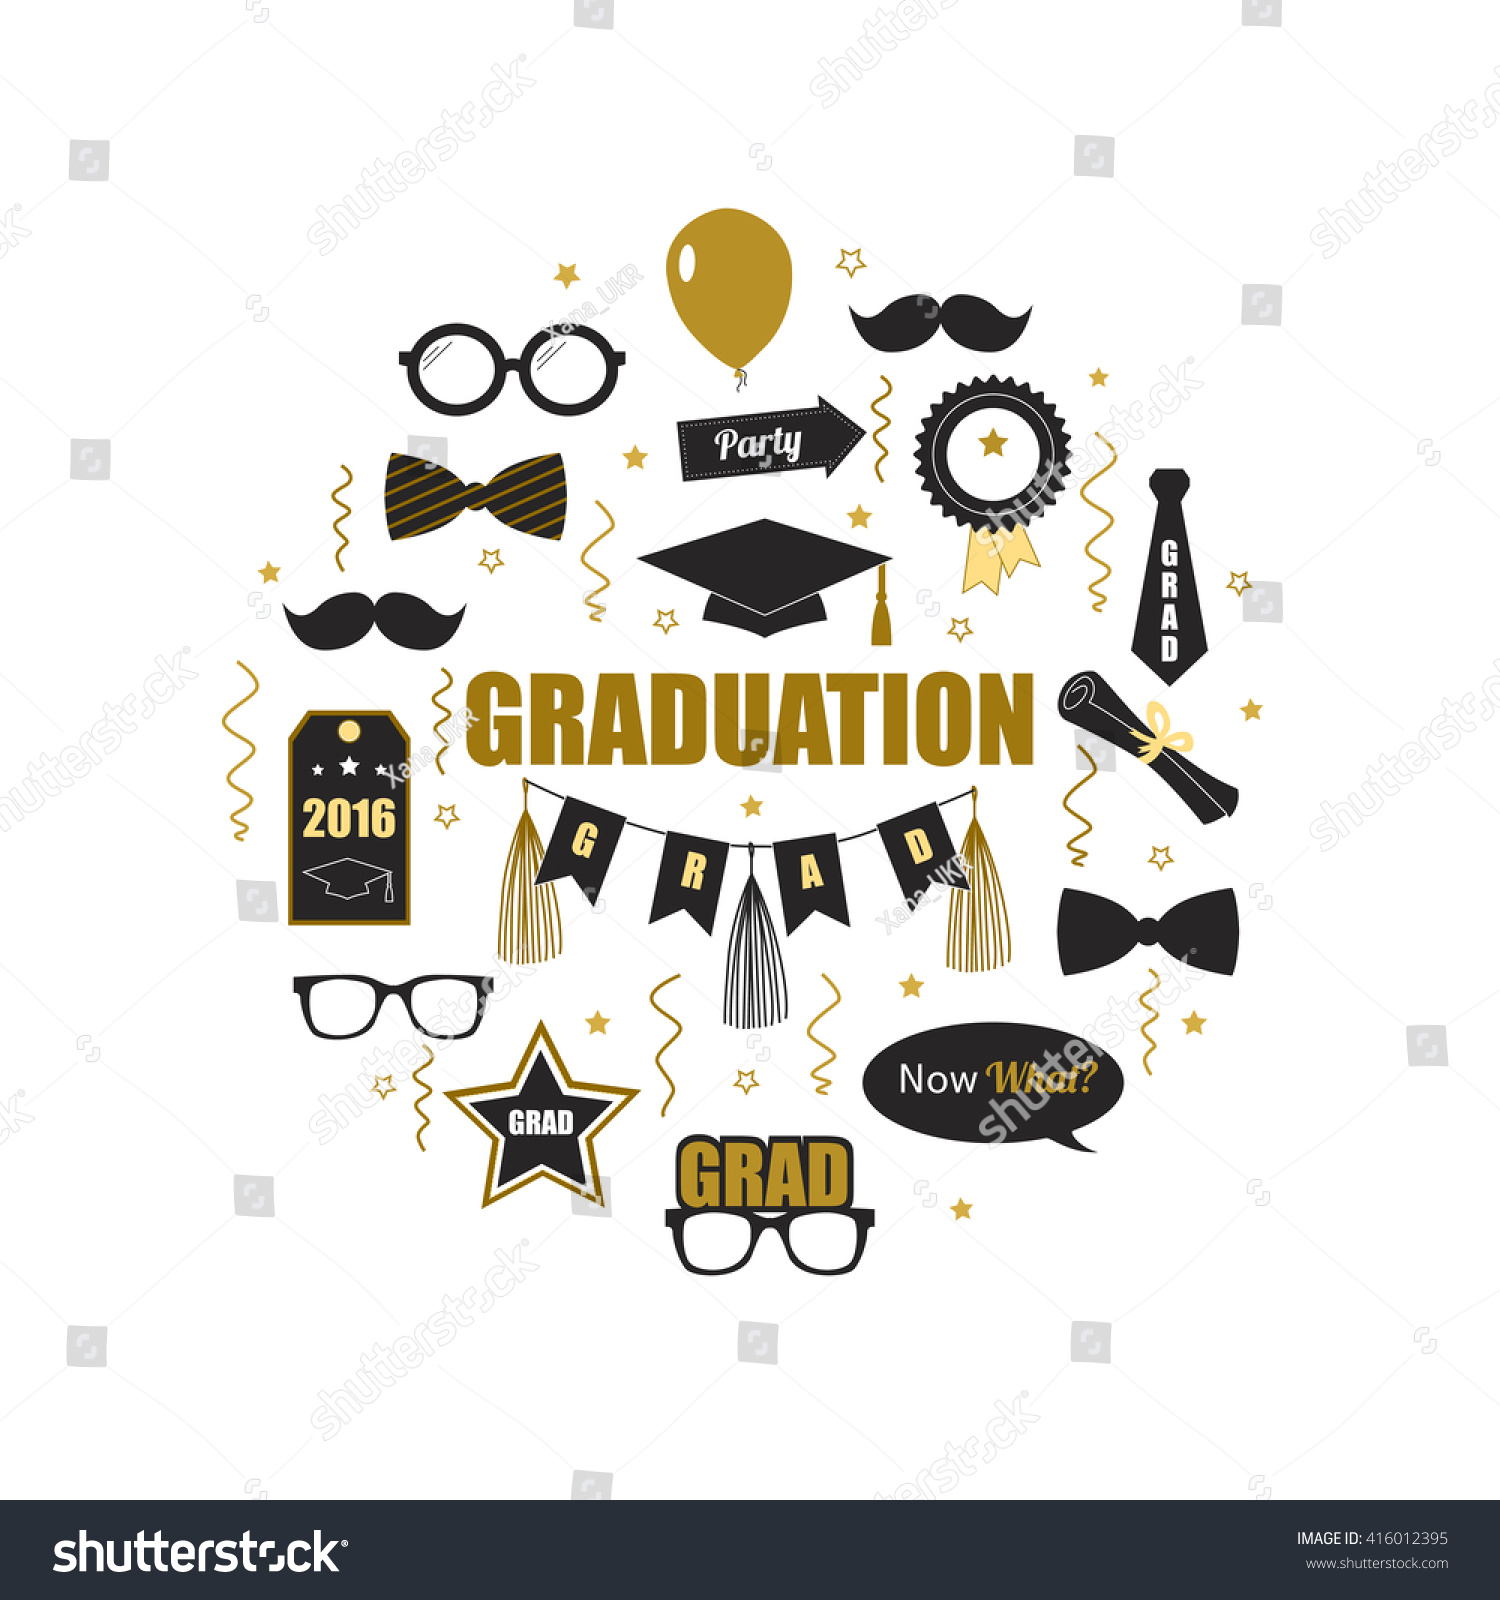 graduation themed clip art - photo #28